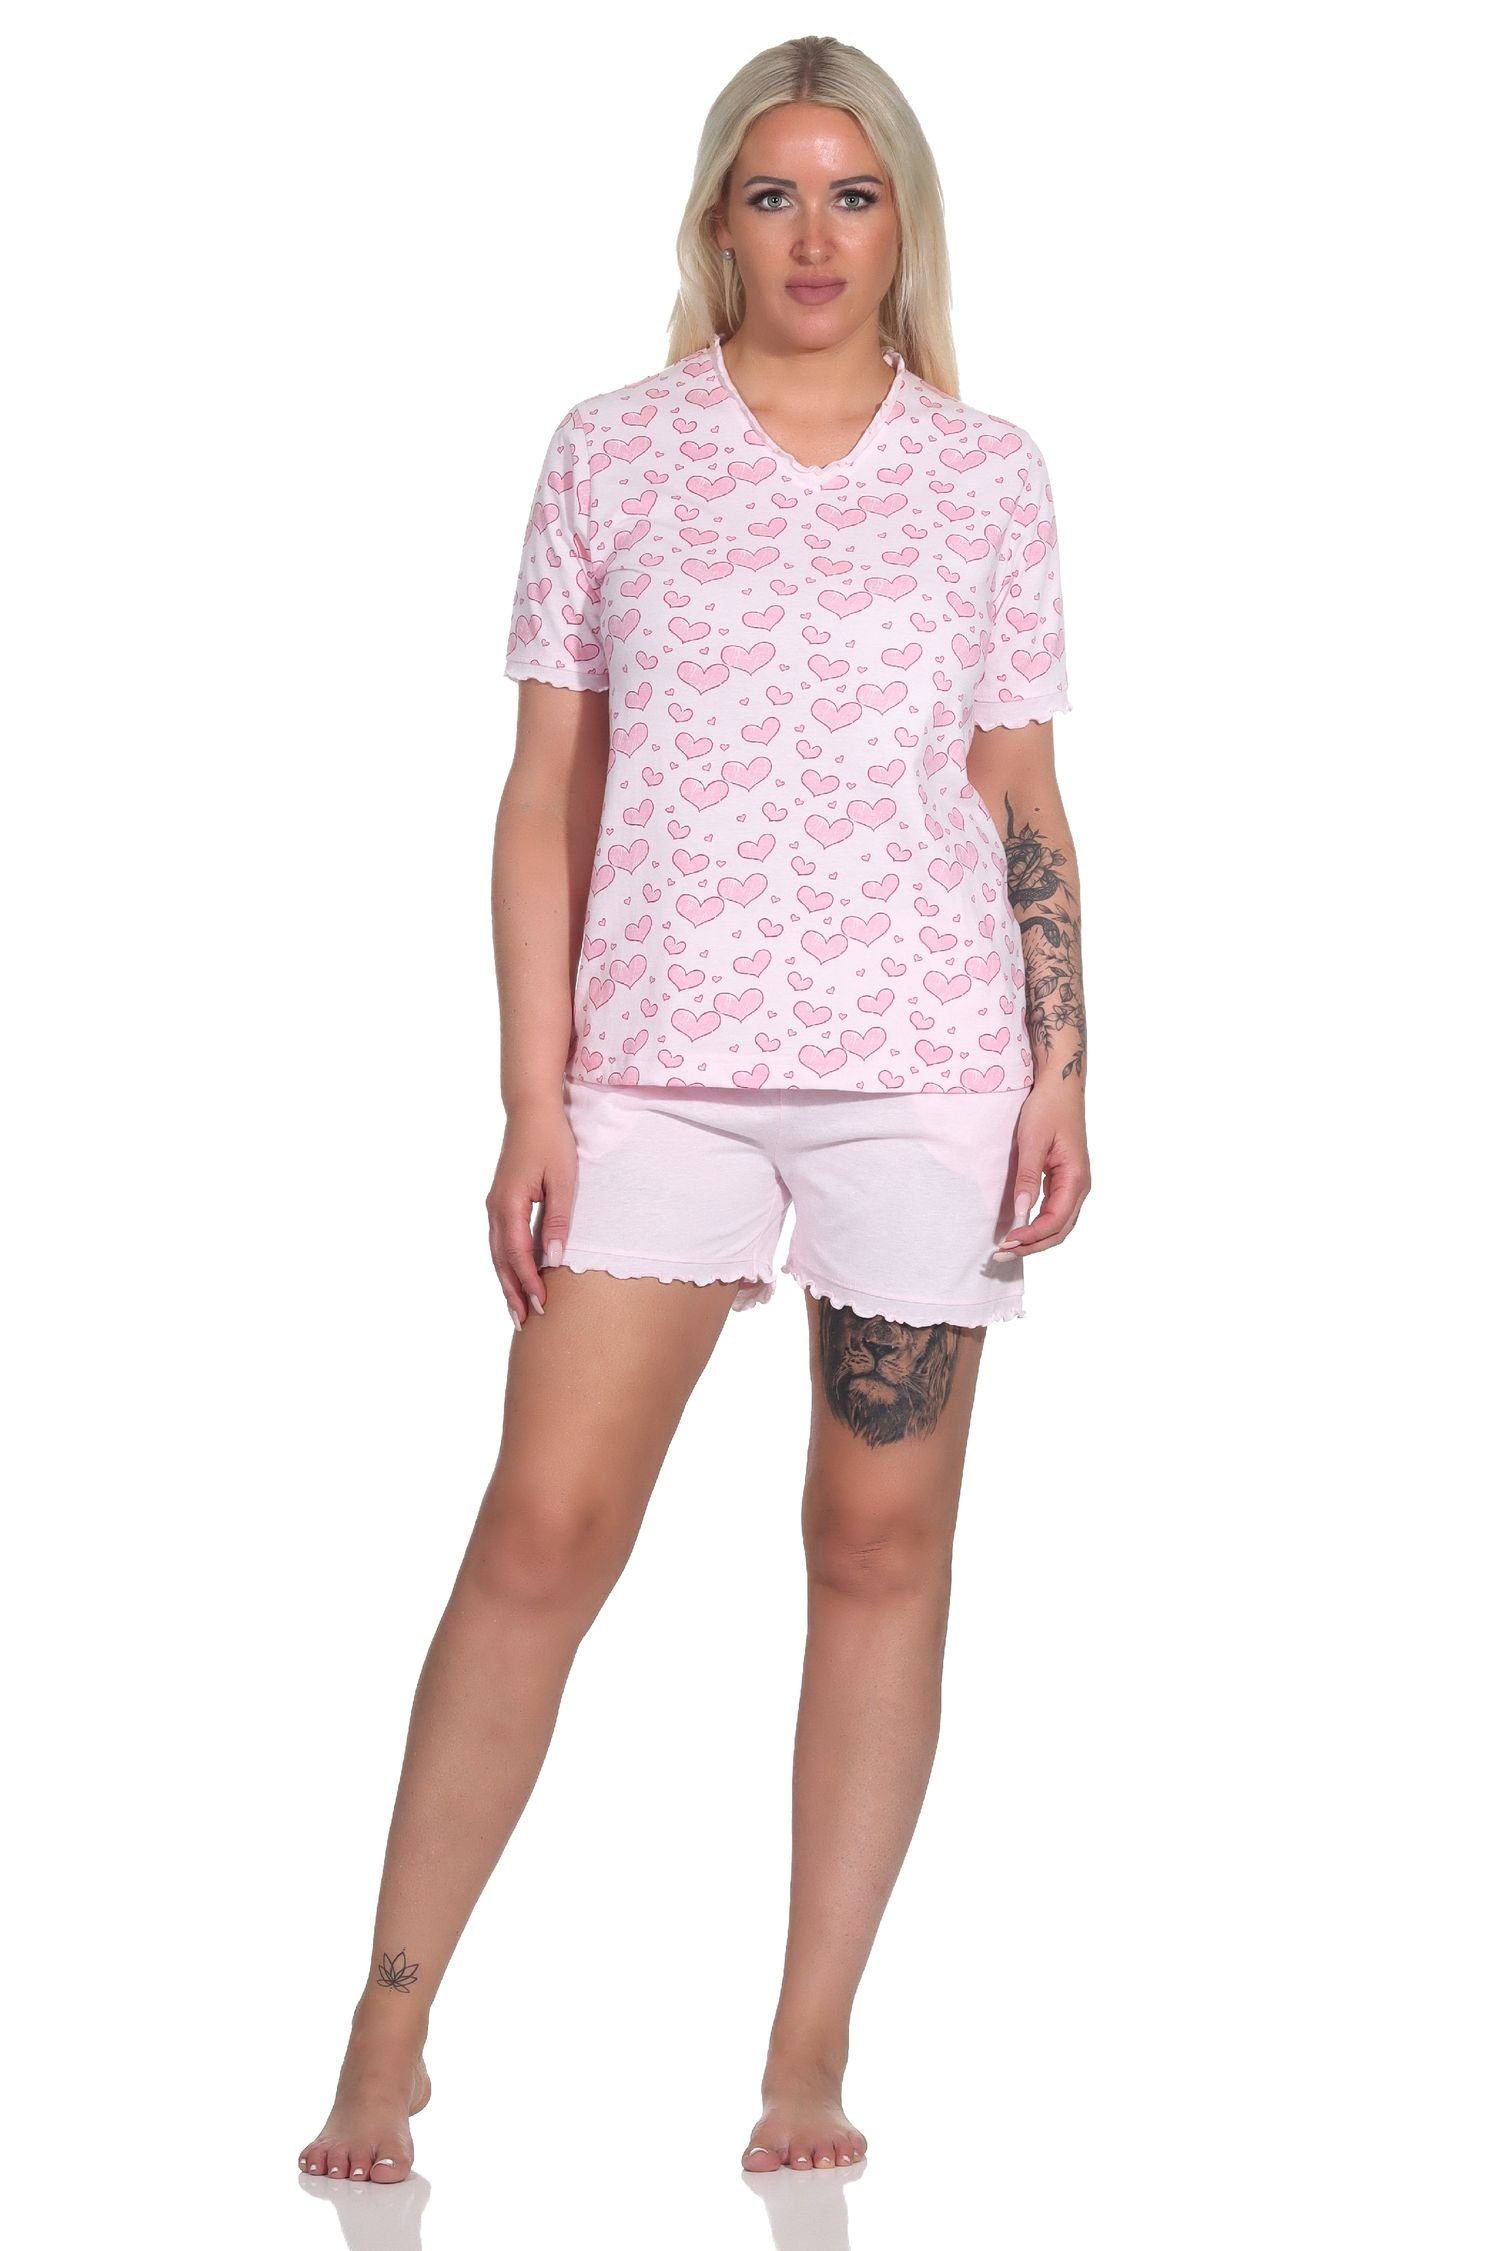 Normann Pyjama Damen Kurzarm Schlafanzug Shorty in Herz Optik - auch in Übergrößen rosa